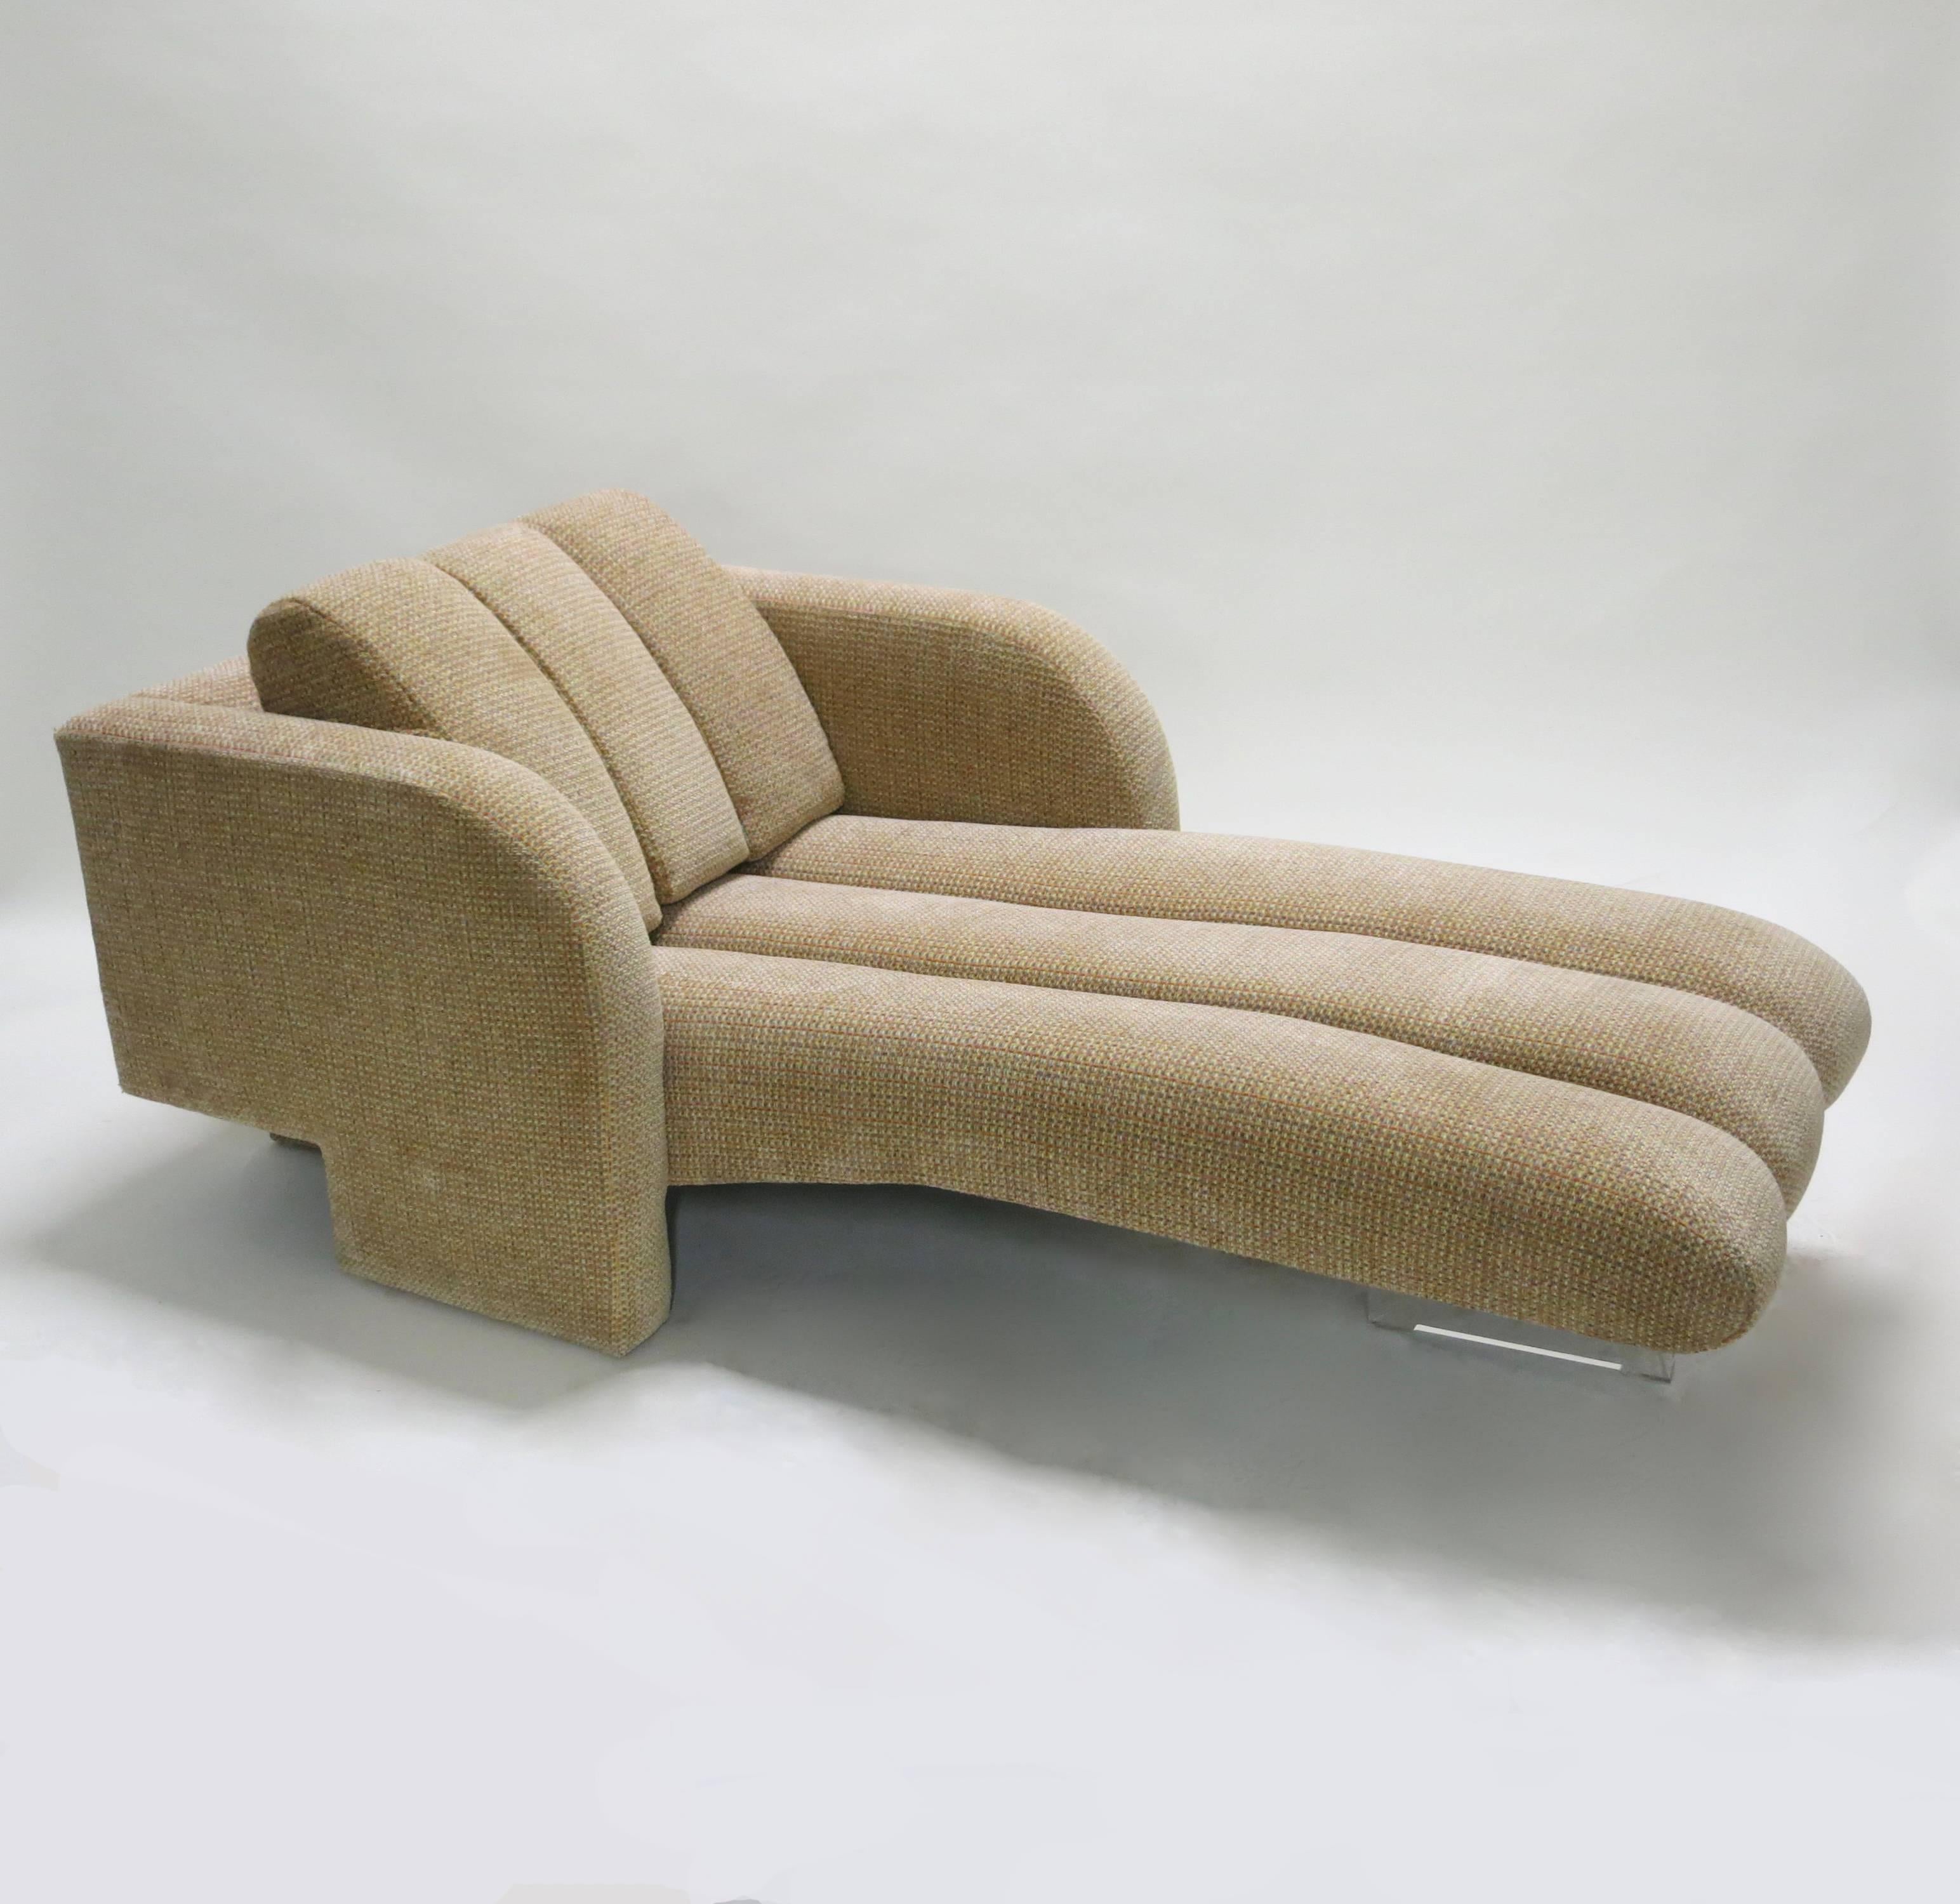 Mid-Century Modern Chaise Longue / Lounge Chair by Vladimir Kagan, USA 1970s